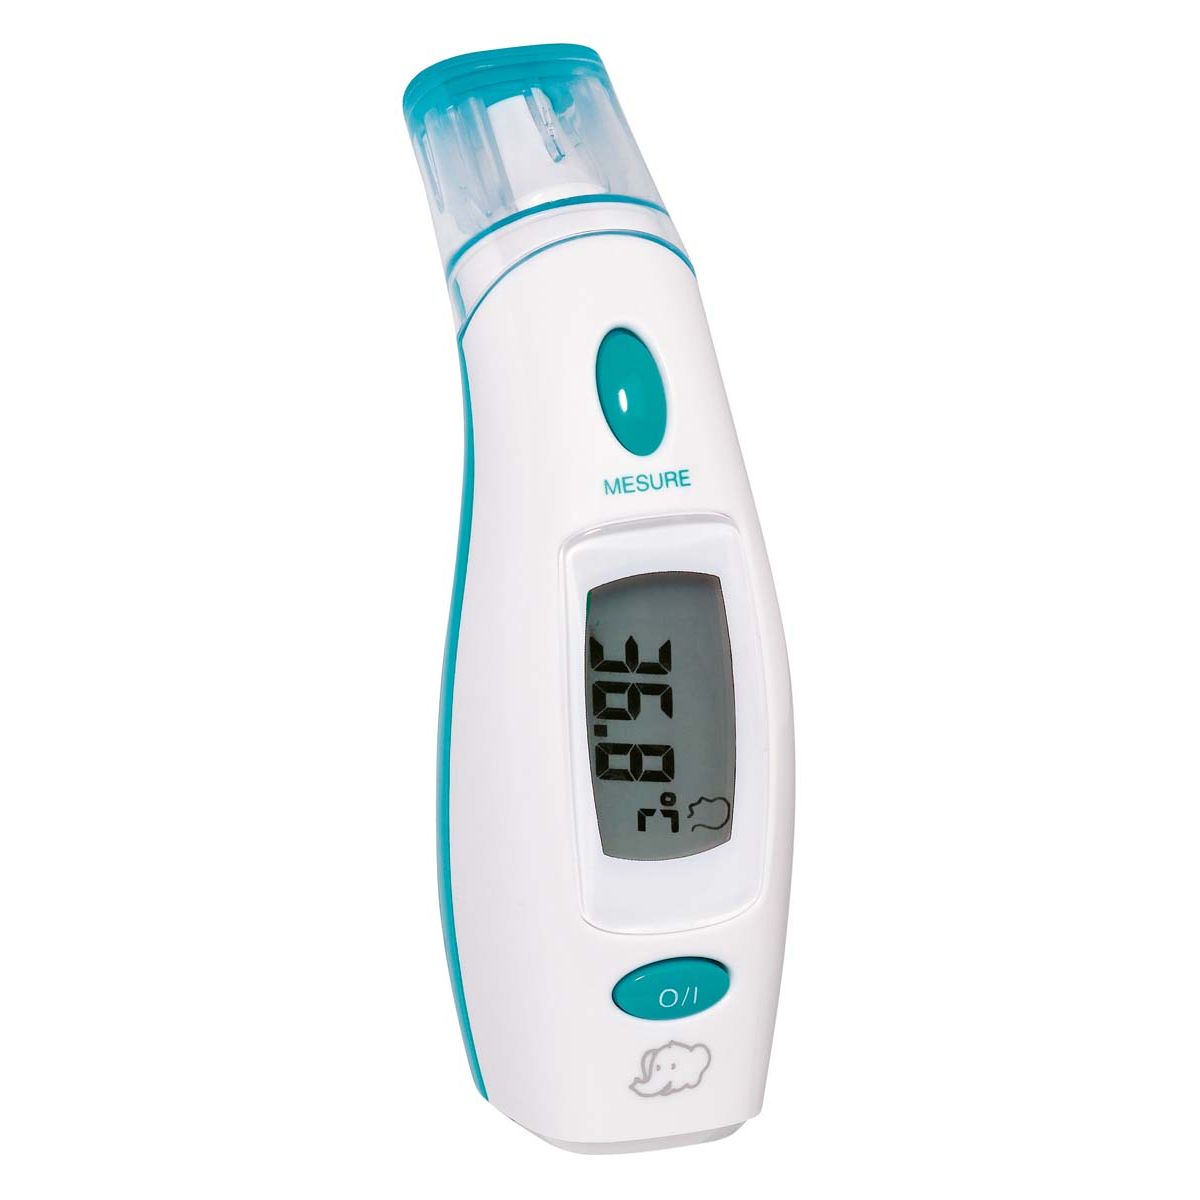 Thermometre duo frontal / auriculaire bébé confort 2014 Bebe Confort